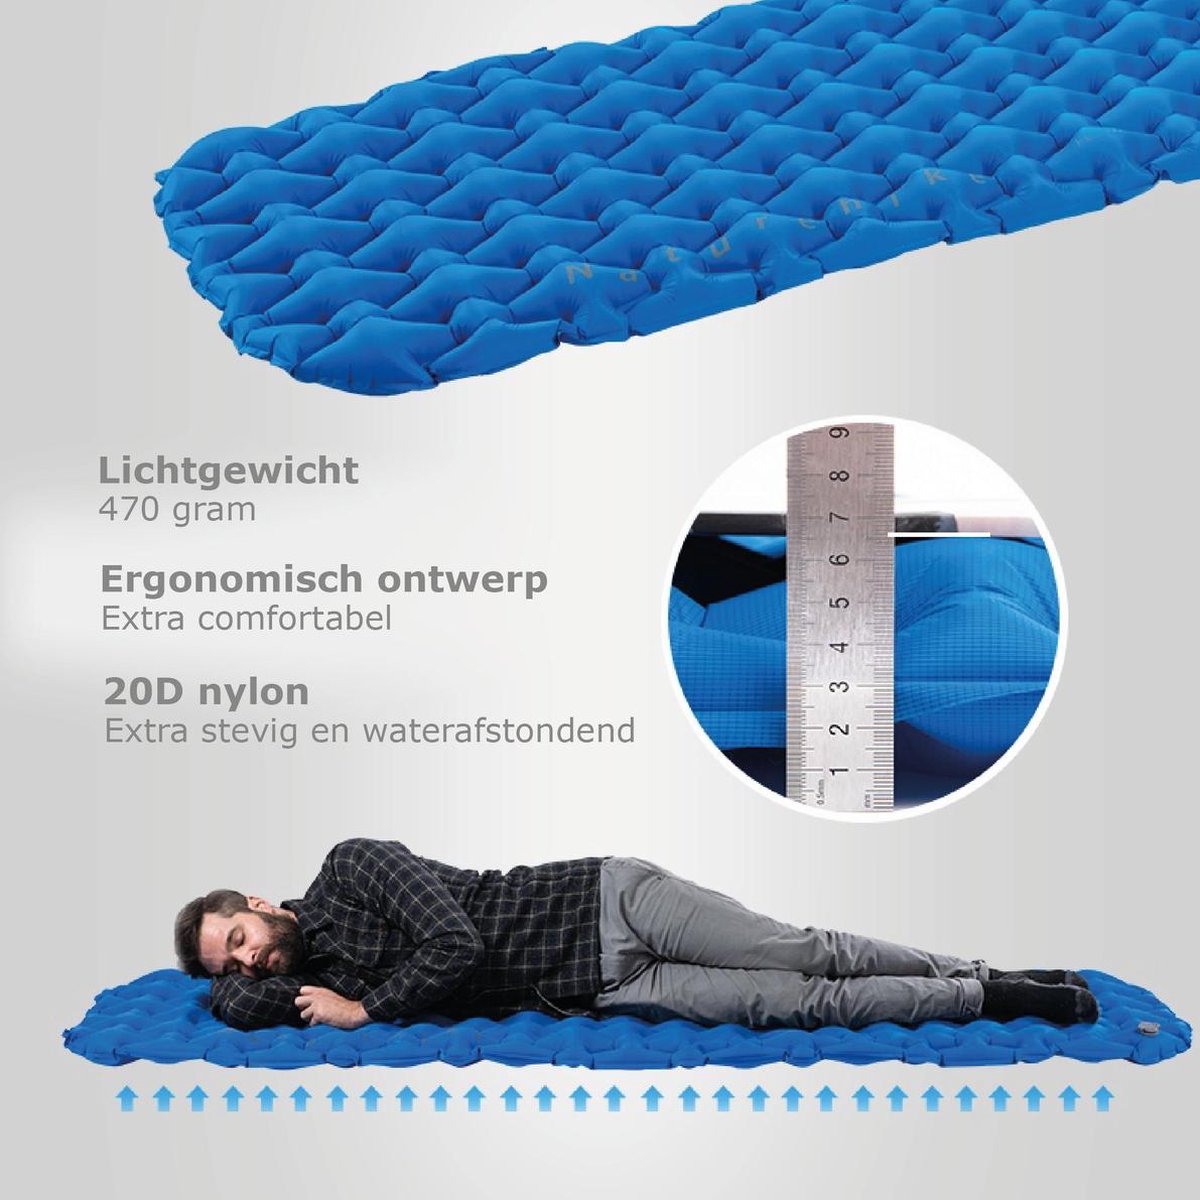 Onbepaald Dapperheid kalkoen AIR Slaapmat met pompzak - Lichtgewicht - 195cm - 7cm dik - Ocean Blue |  bol.com